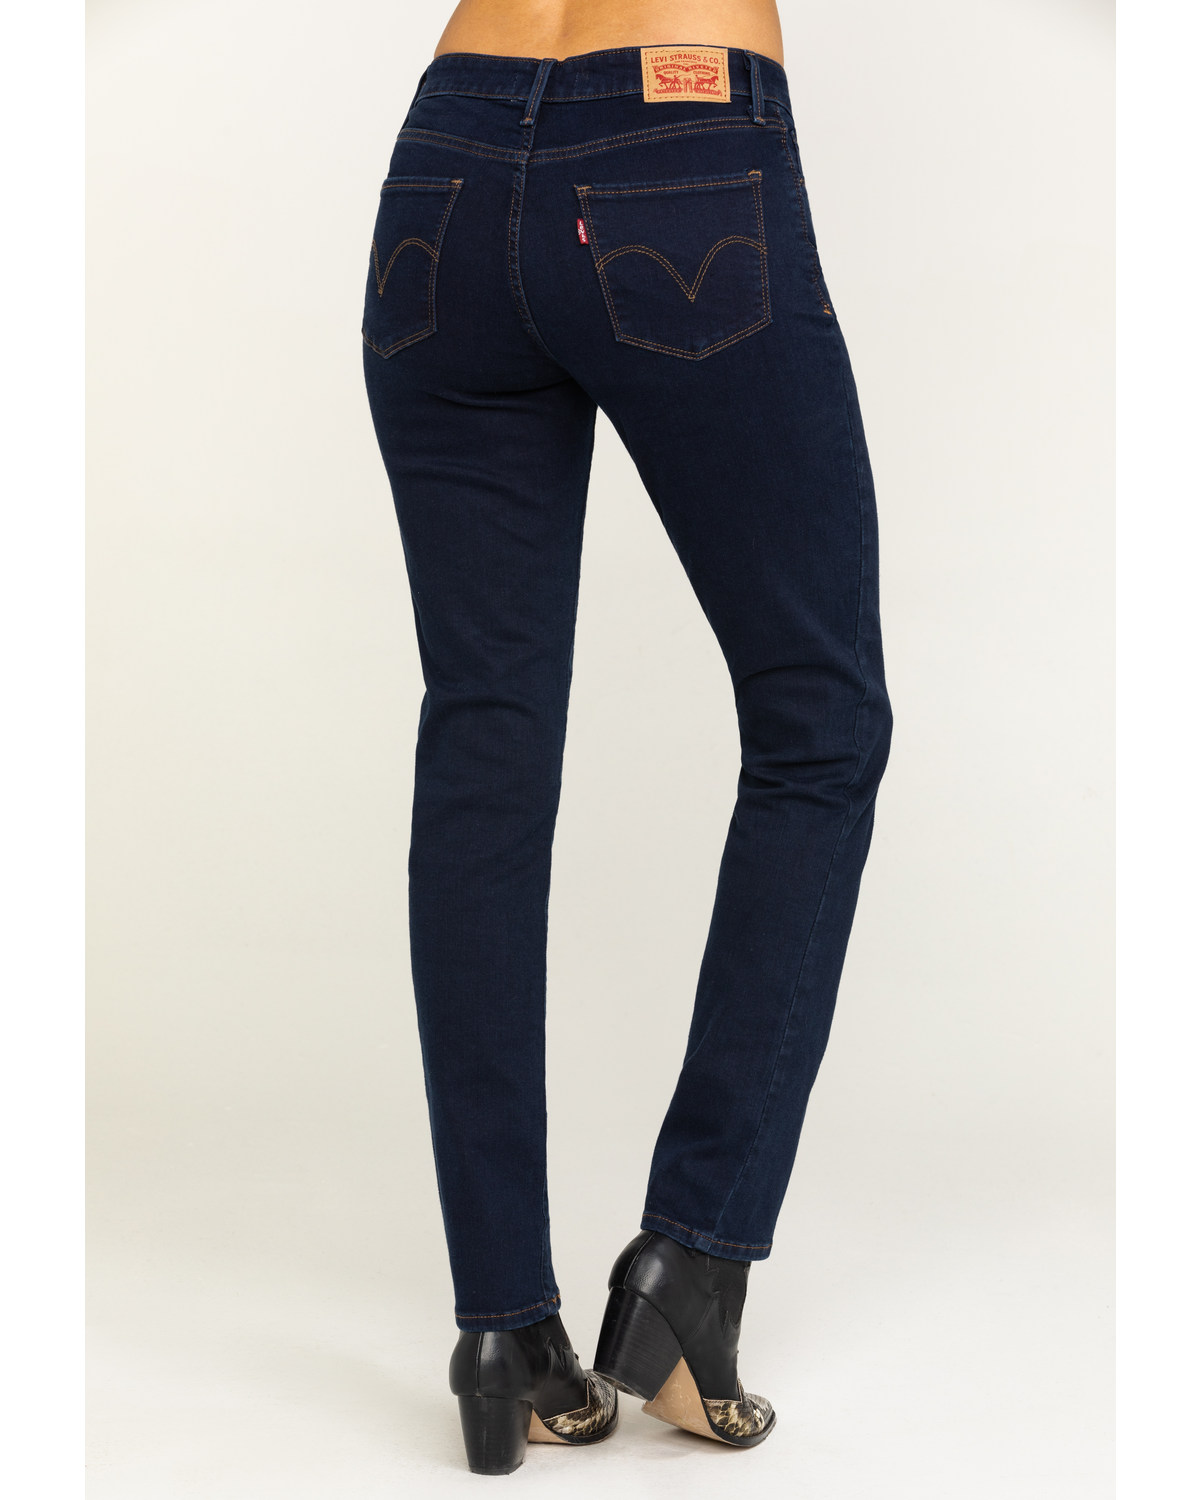 Levi's Women's Classic Dark Wash Skinny Jeans | Boot Barn